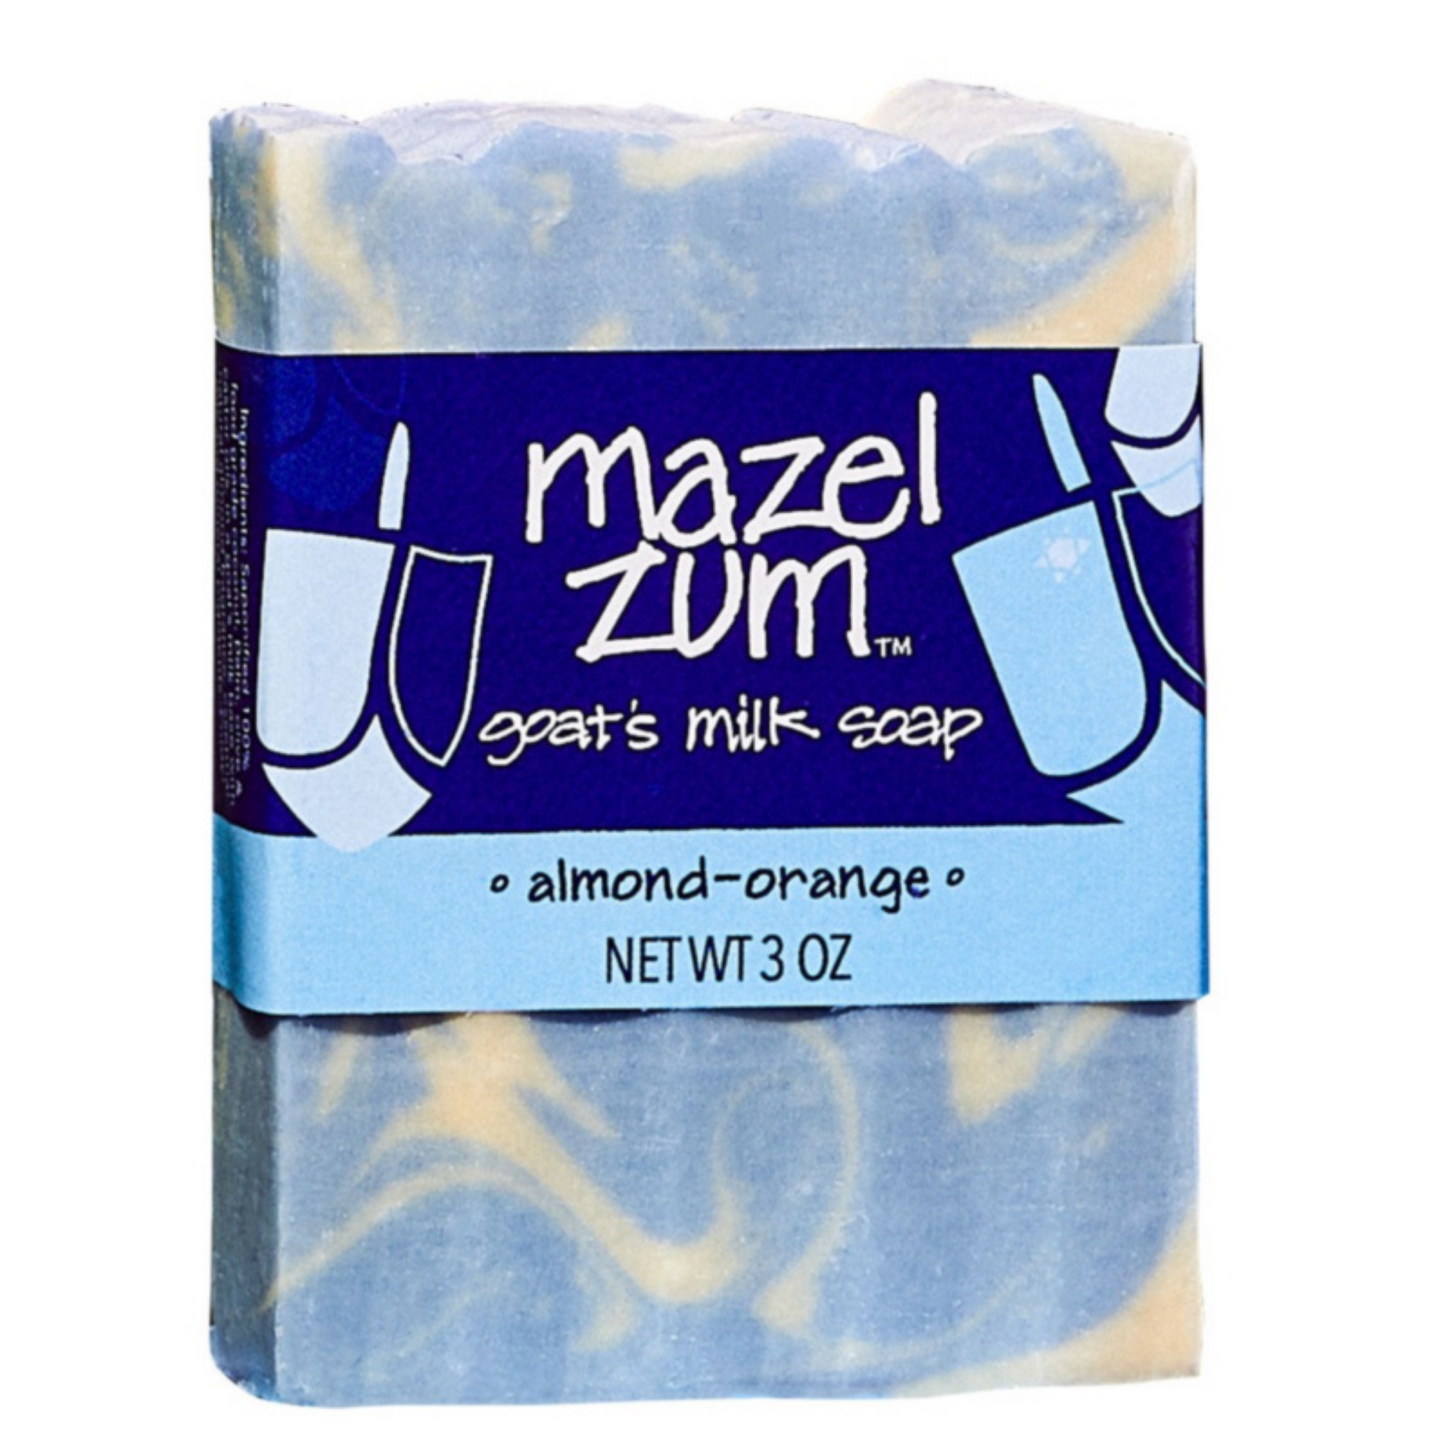 Primary Image of Mazel Zum Bar Almond-Orange